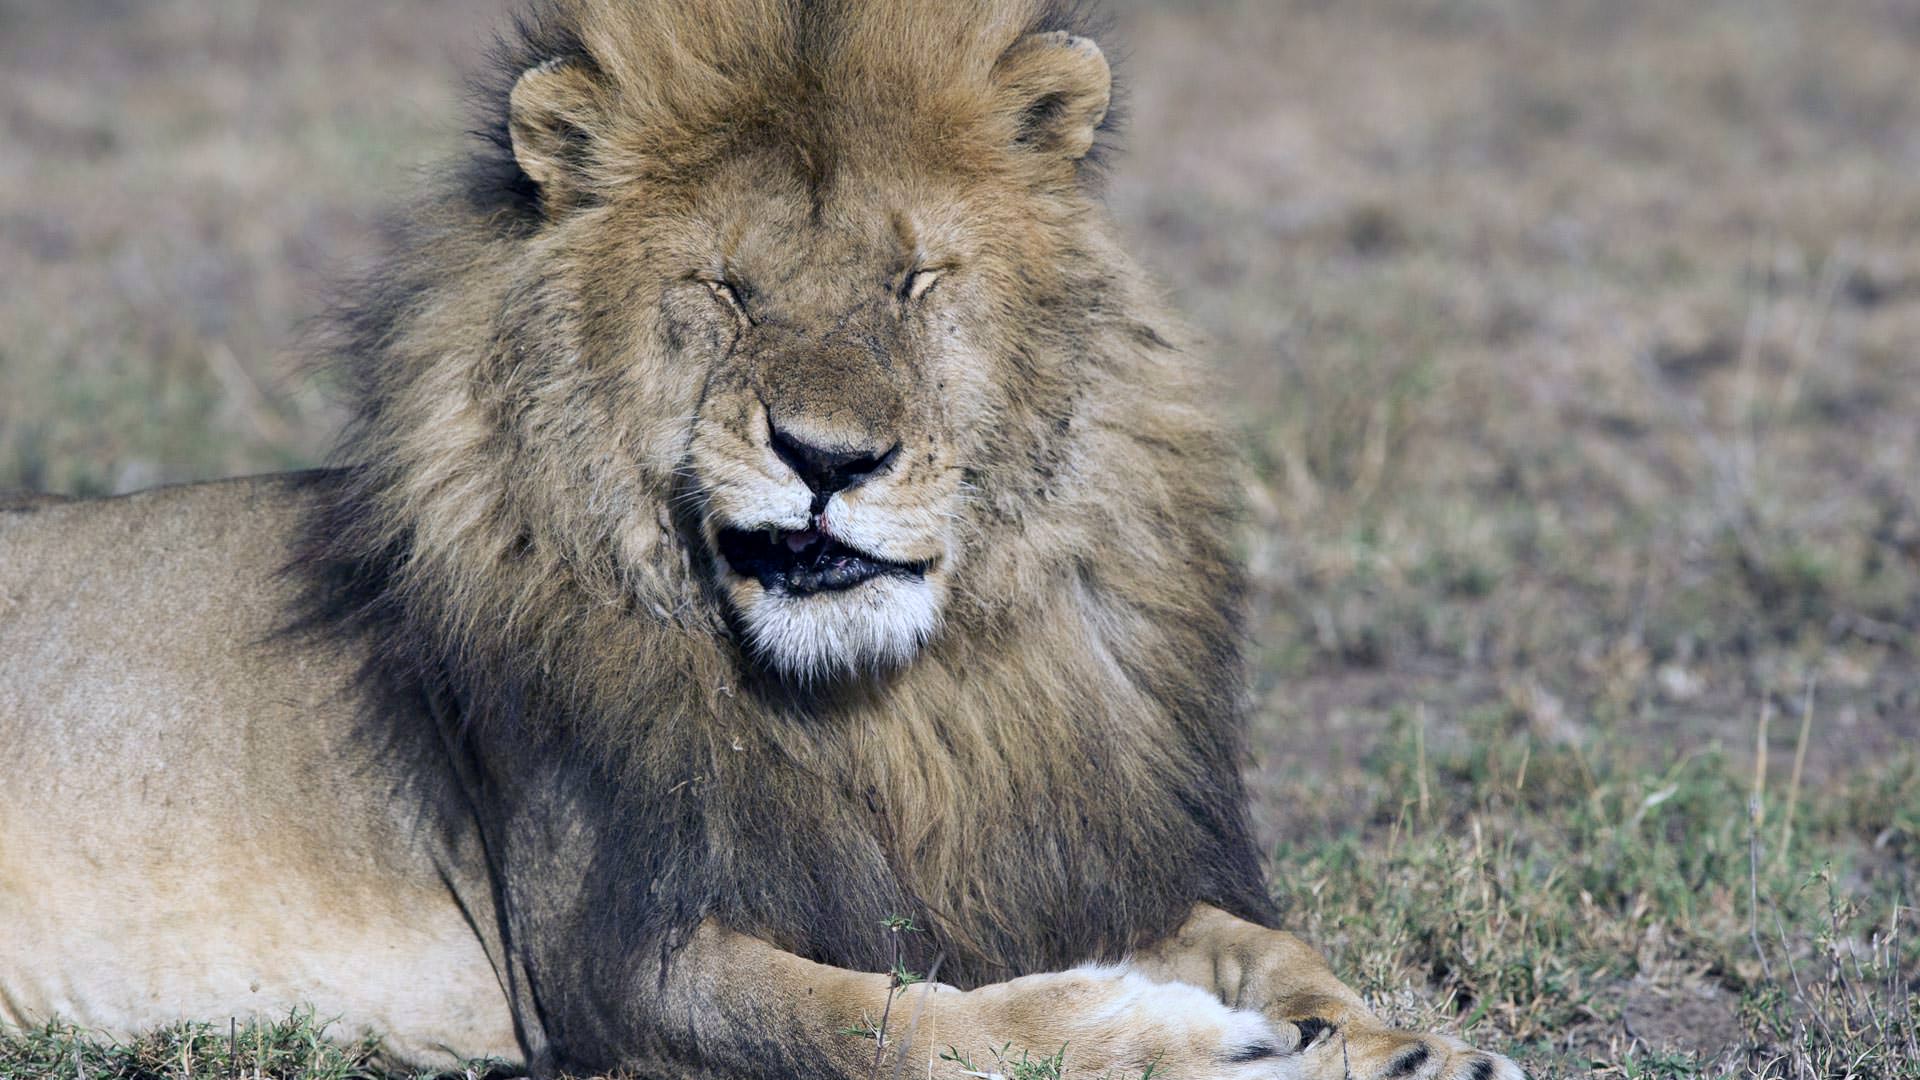 Male lion waking up